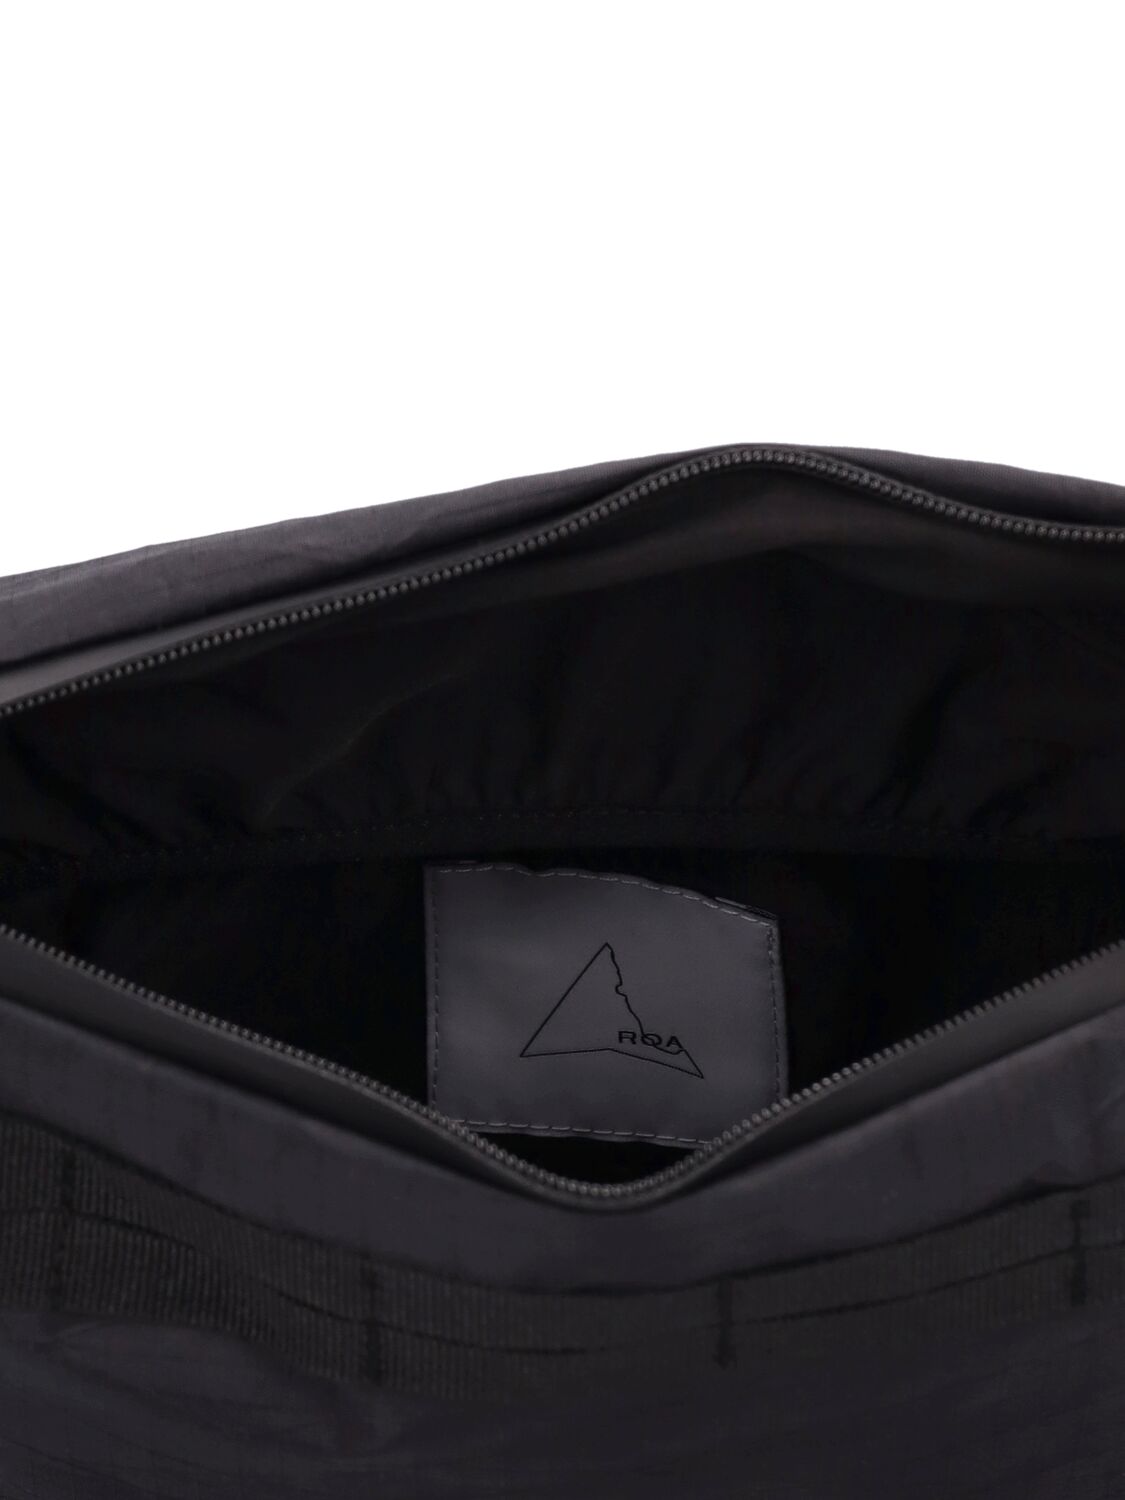 Shop Roa Crossbody Bag In Black Xpack